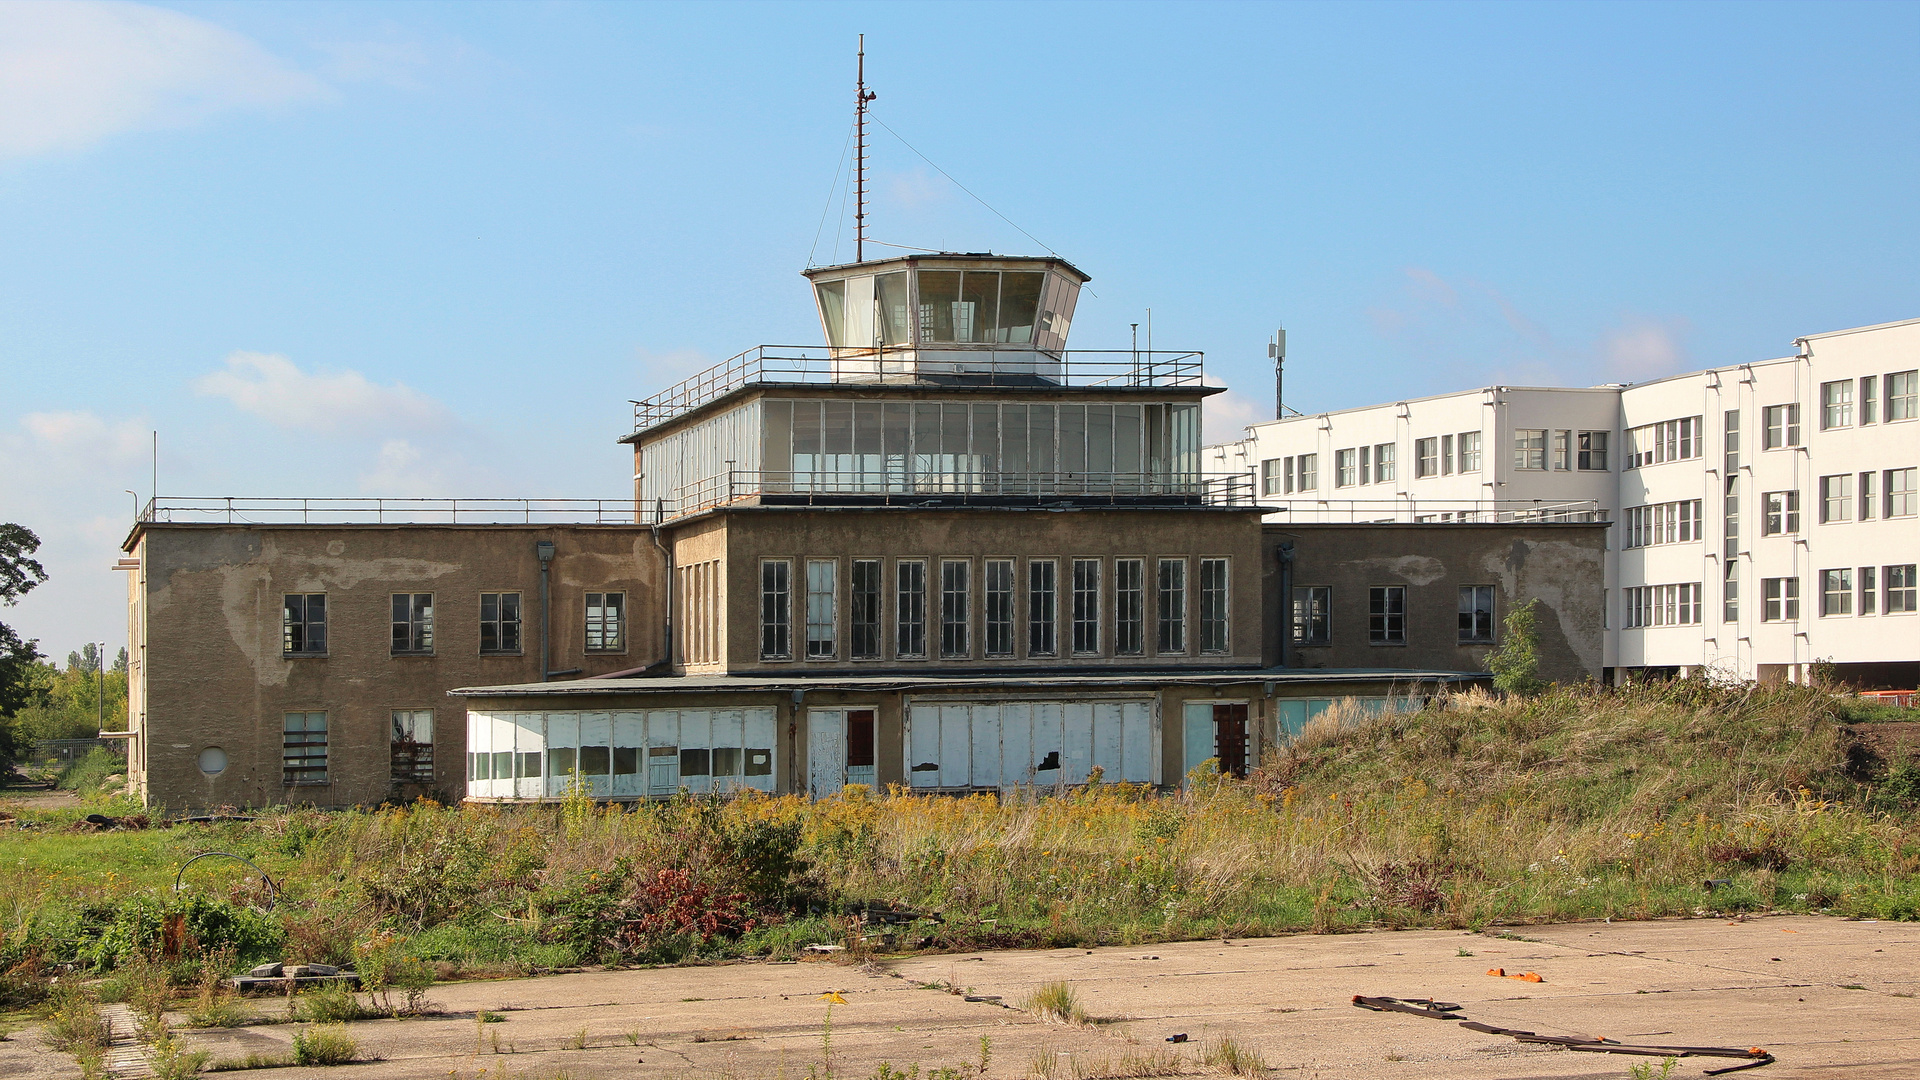 alter Zeppelinflughafen